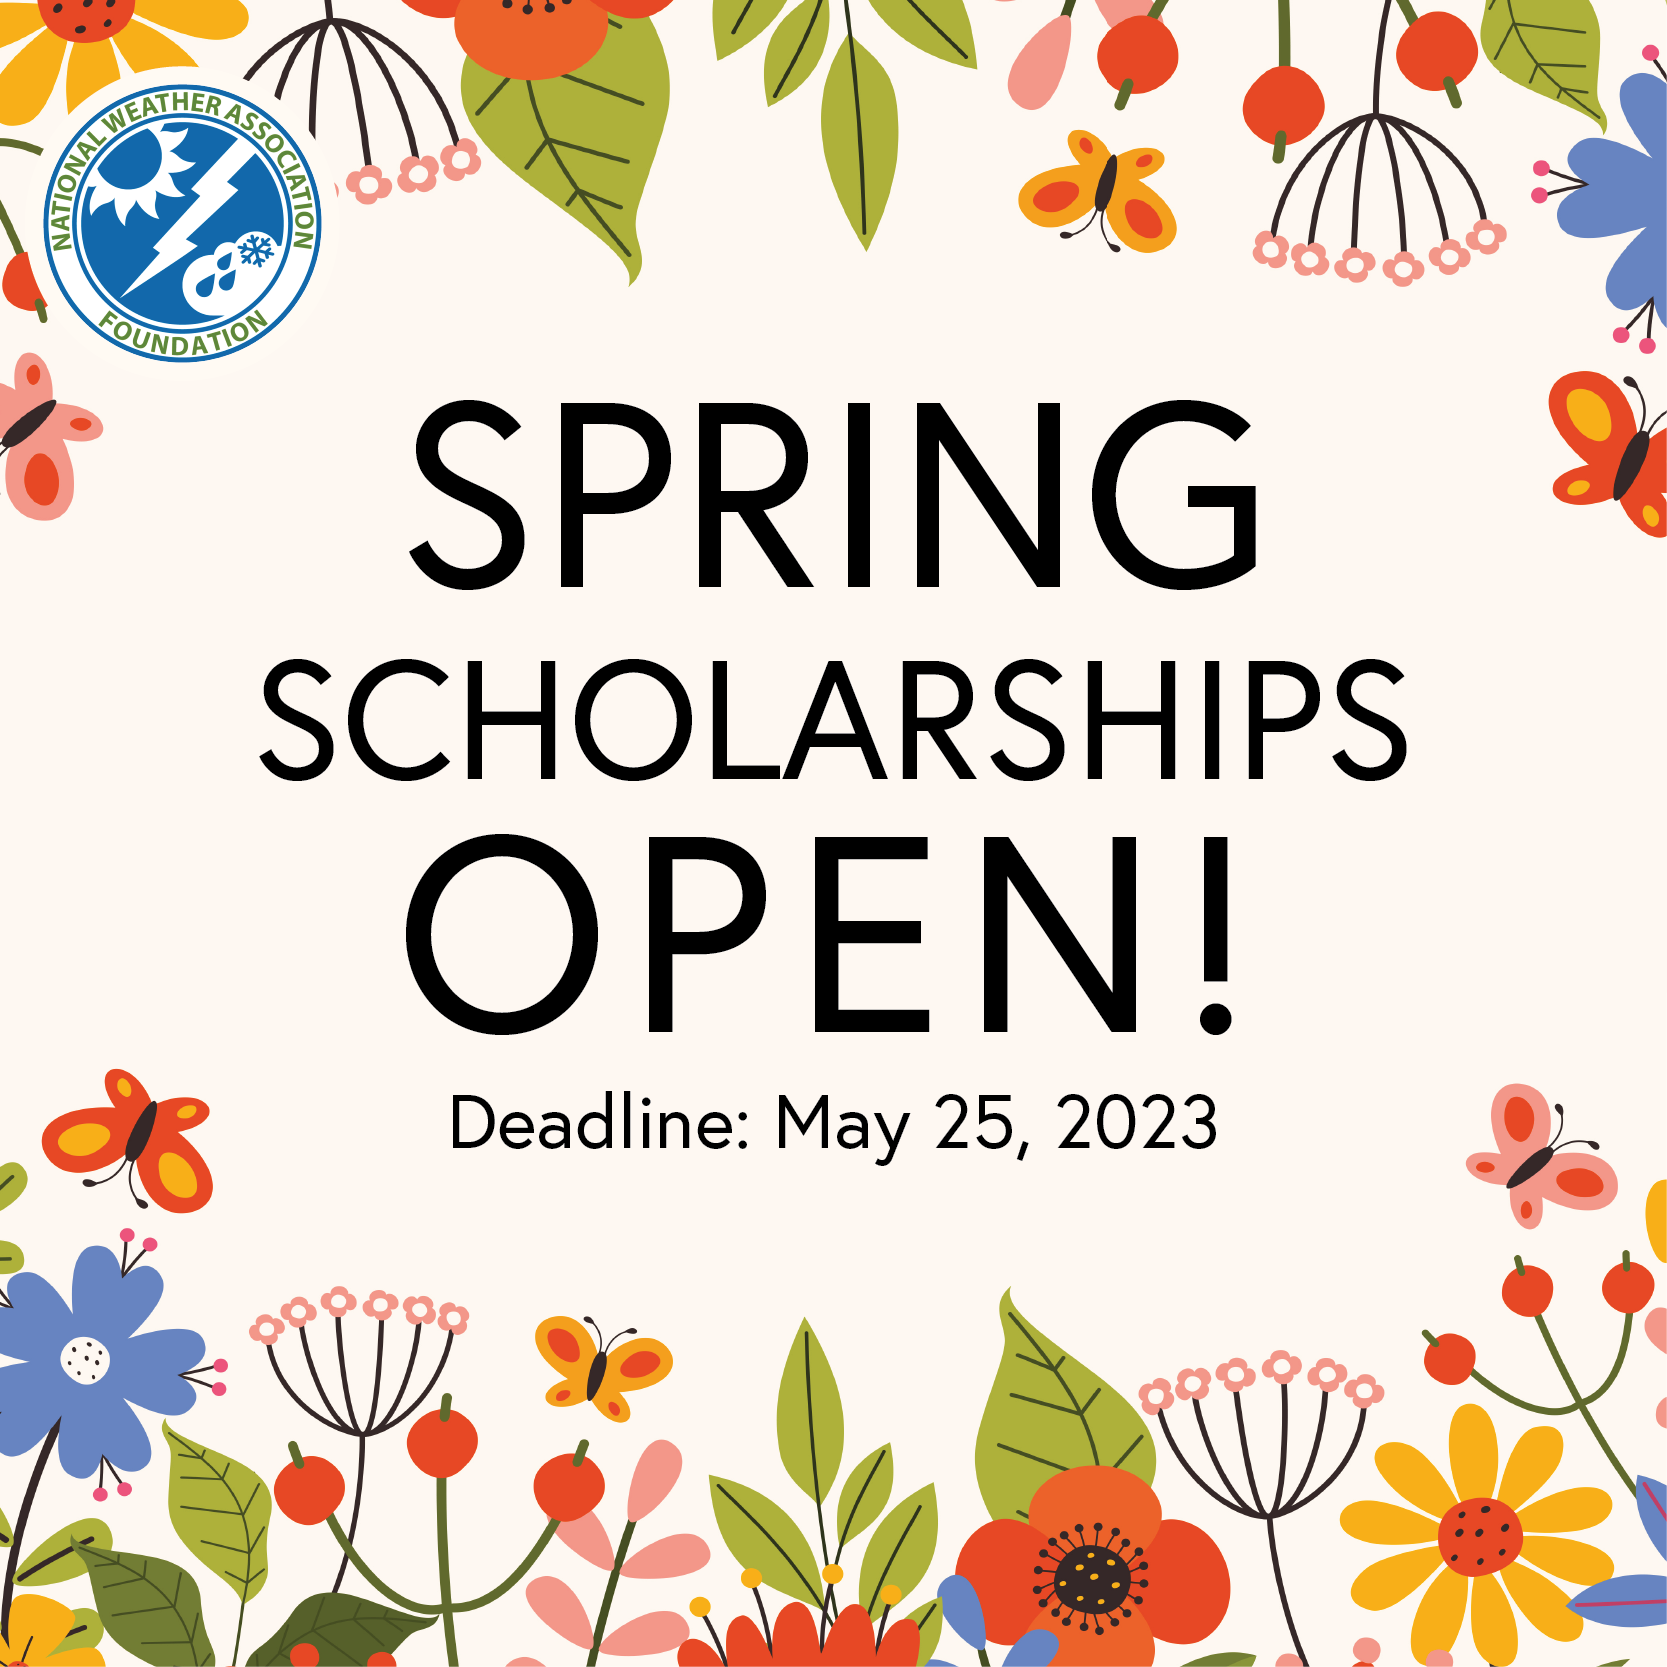 Spring Scholarships Open! Deadline: May 25, 2023